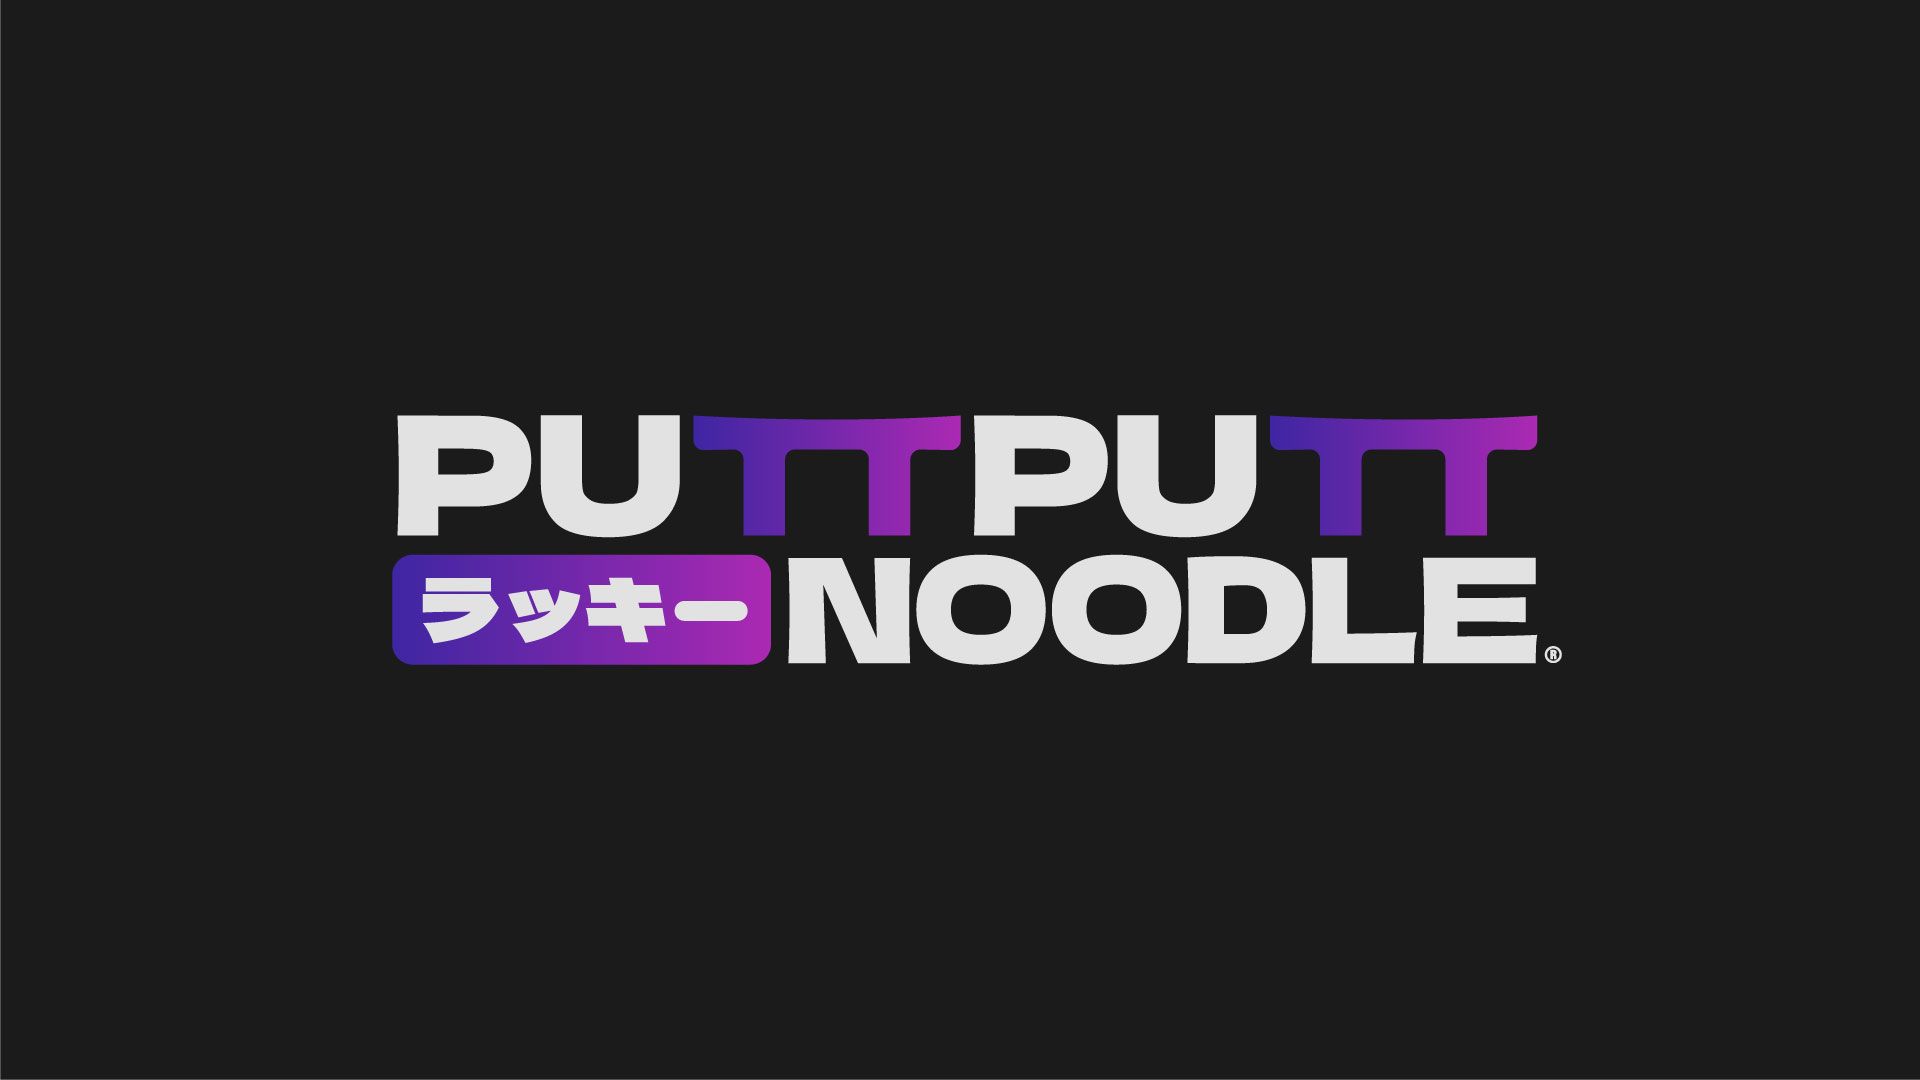 Putt Putt Noodle